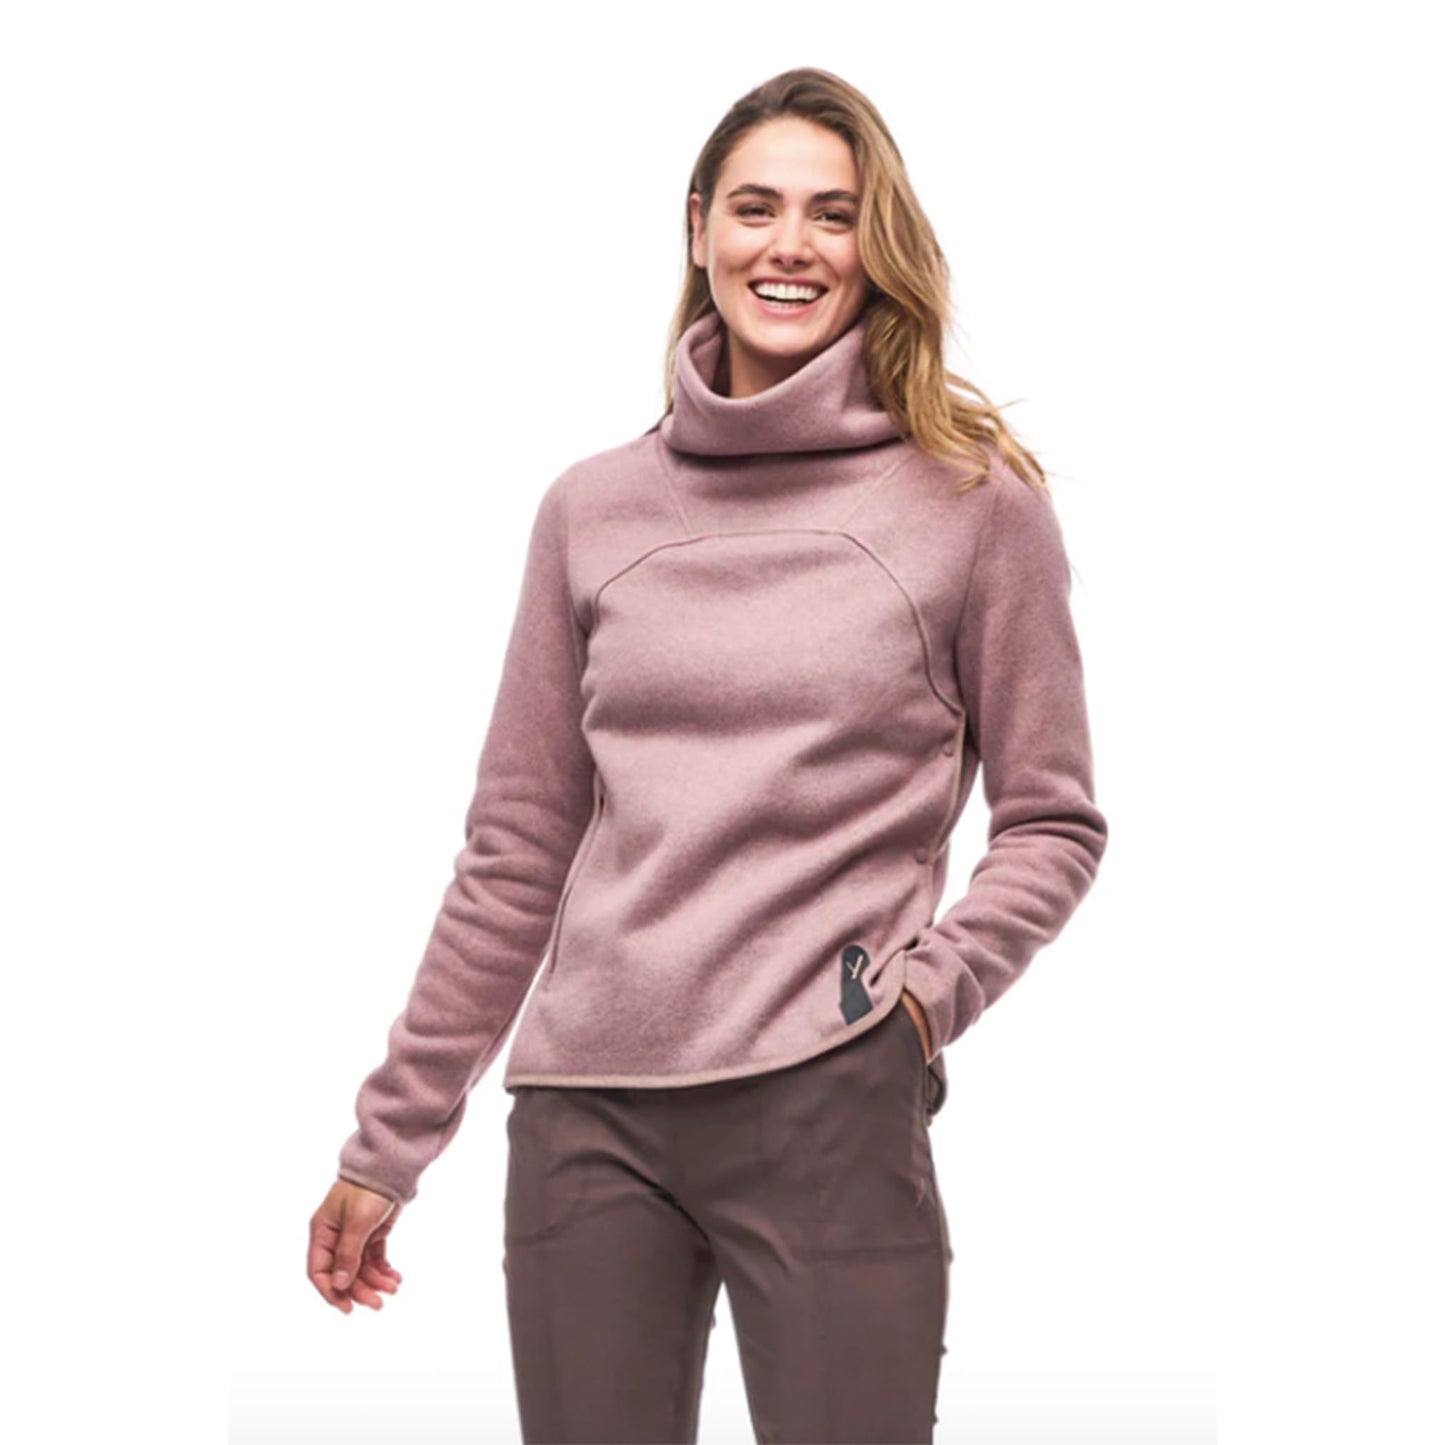 Indyeva Women's Toga Microfleece Sweater in Sepia Rose